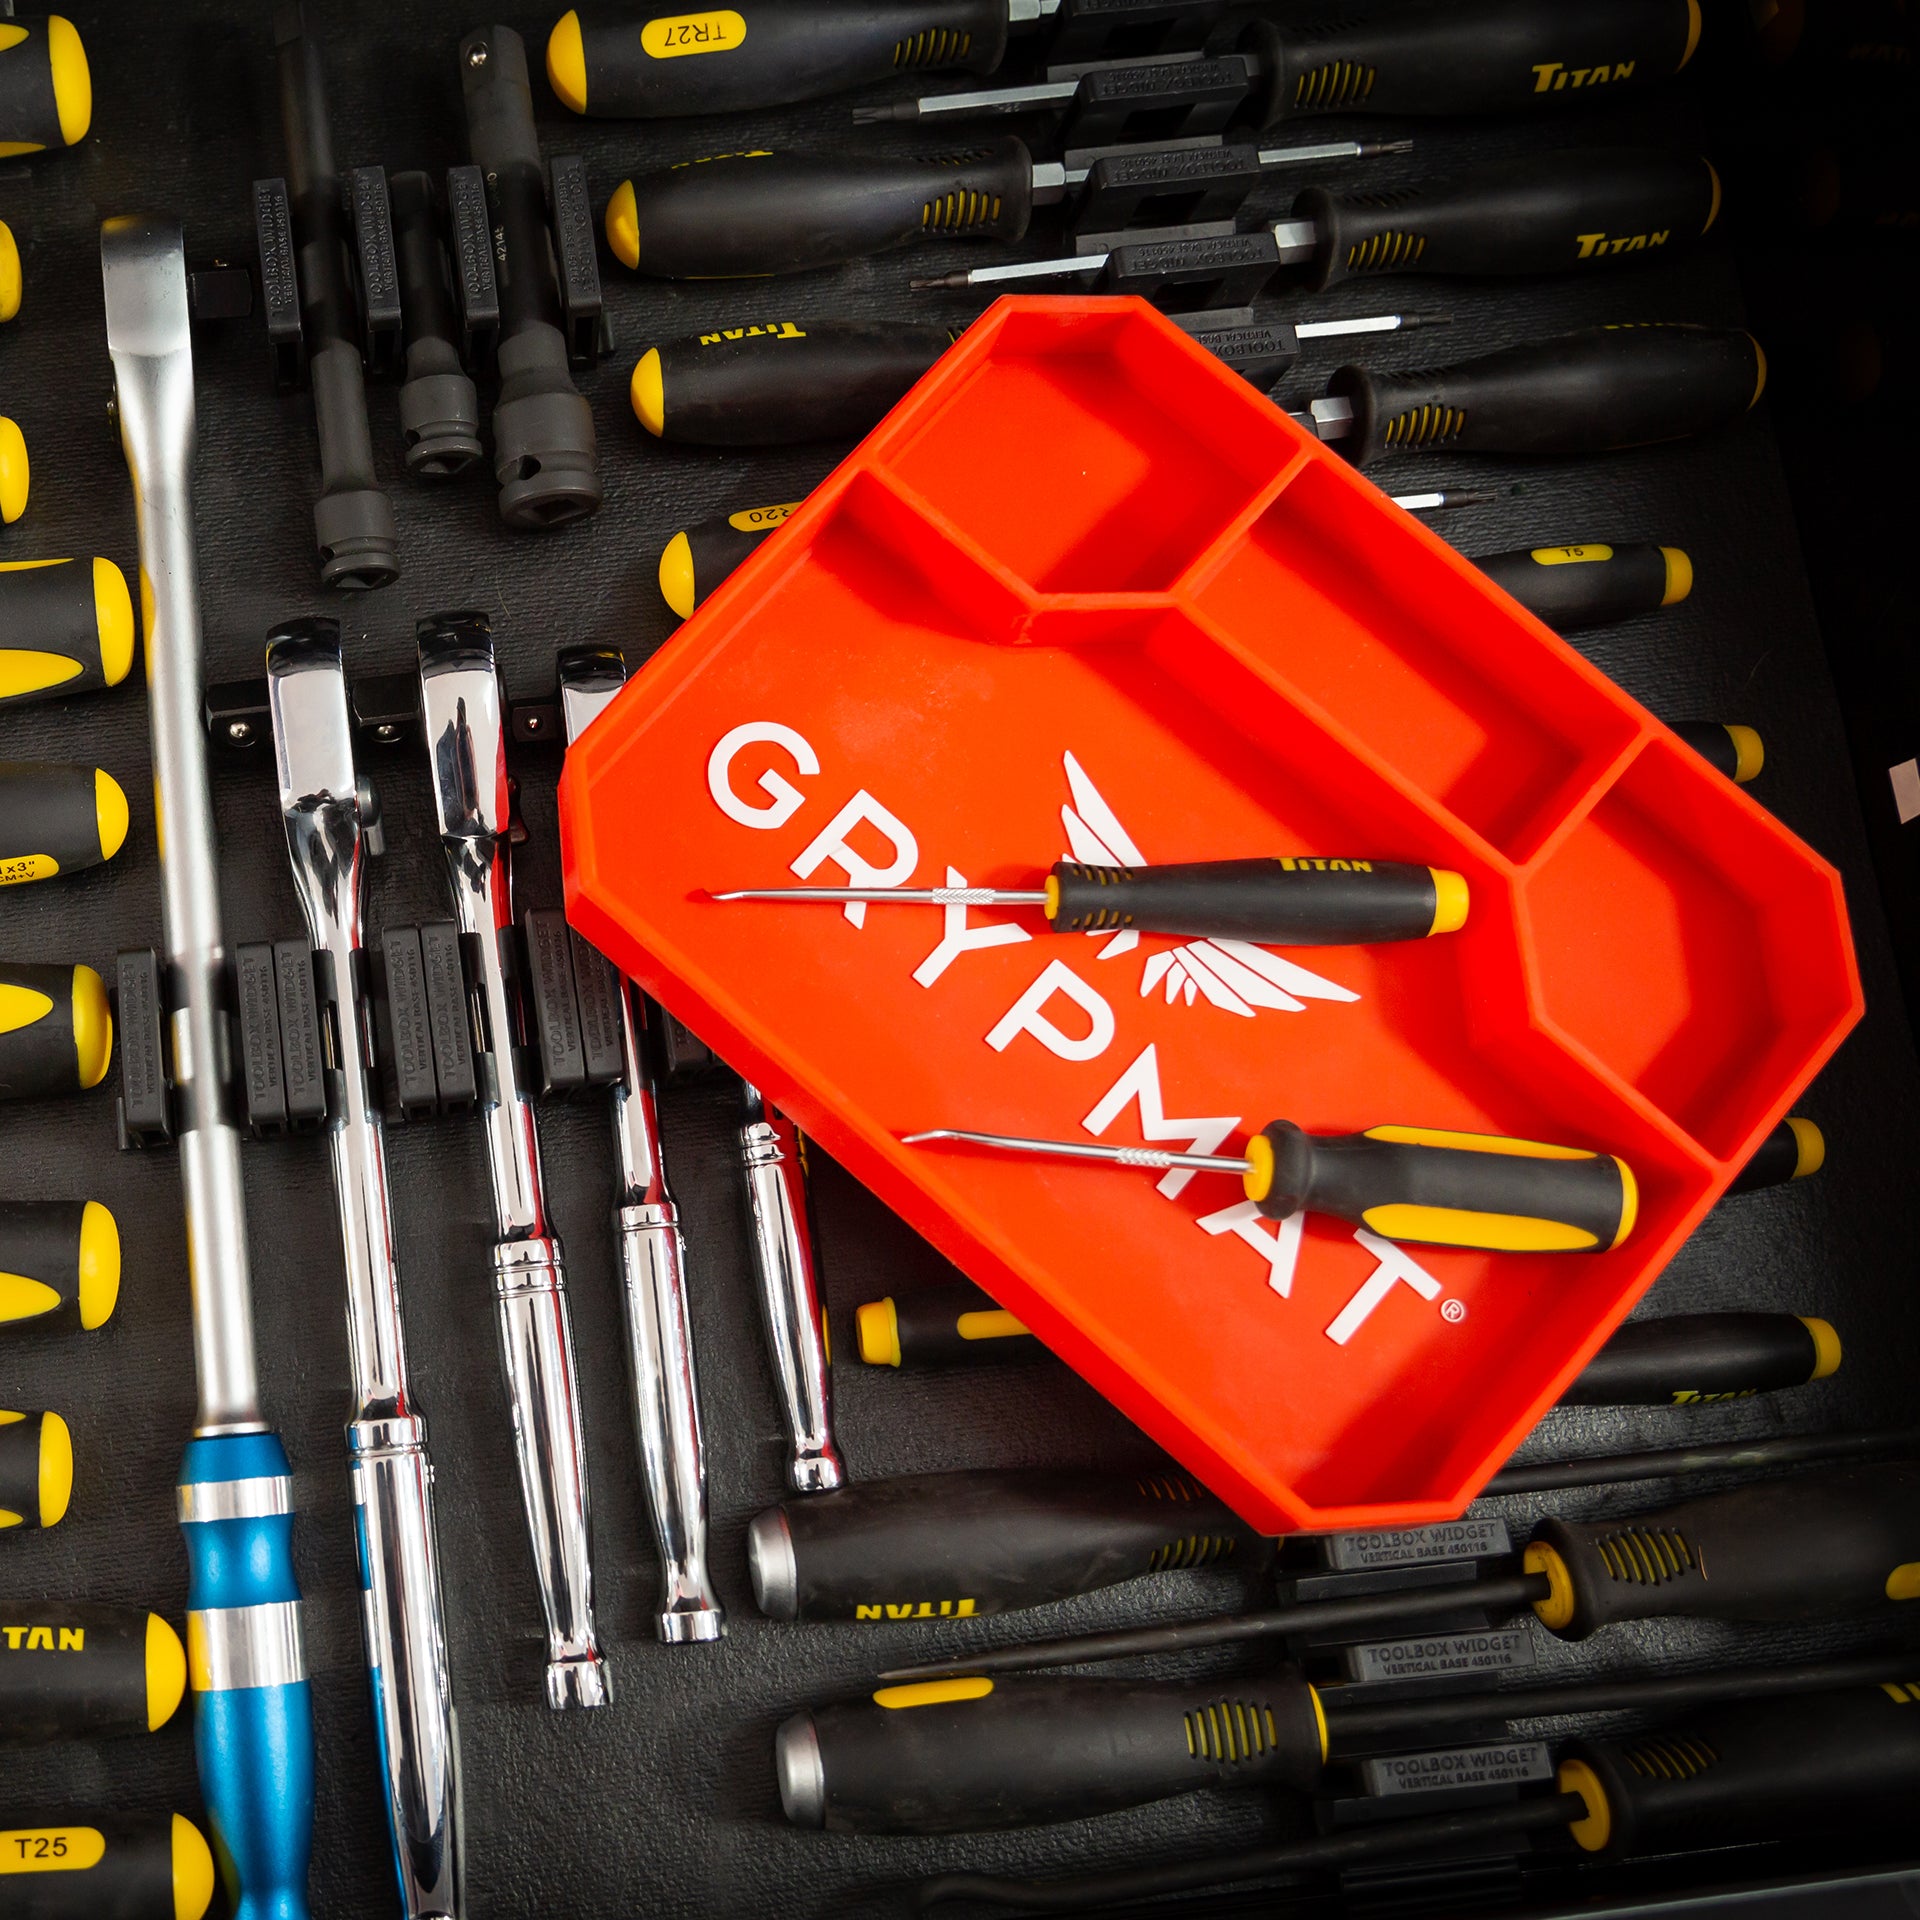 Shop Now Grypmat-Plus-Medium | Tool Mat Powered by Toolbox Widget Gray